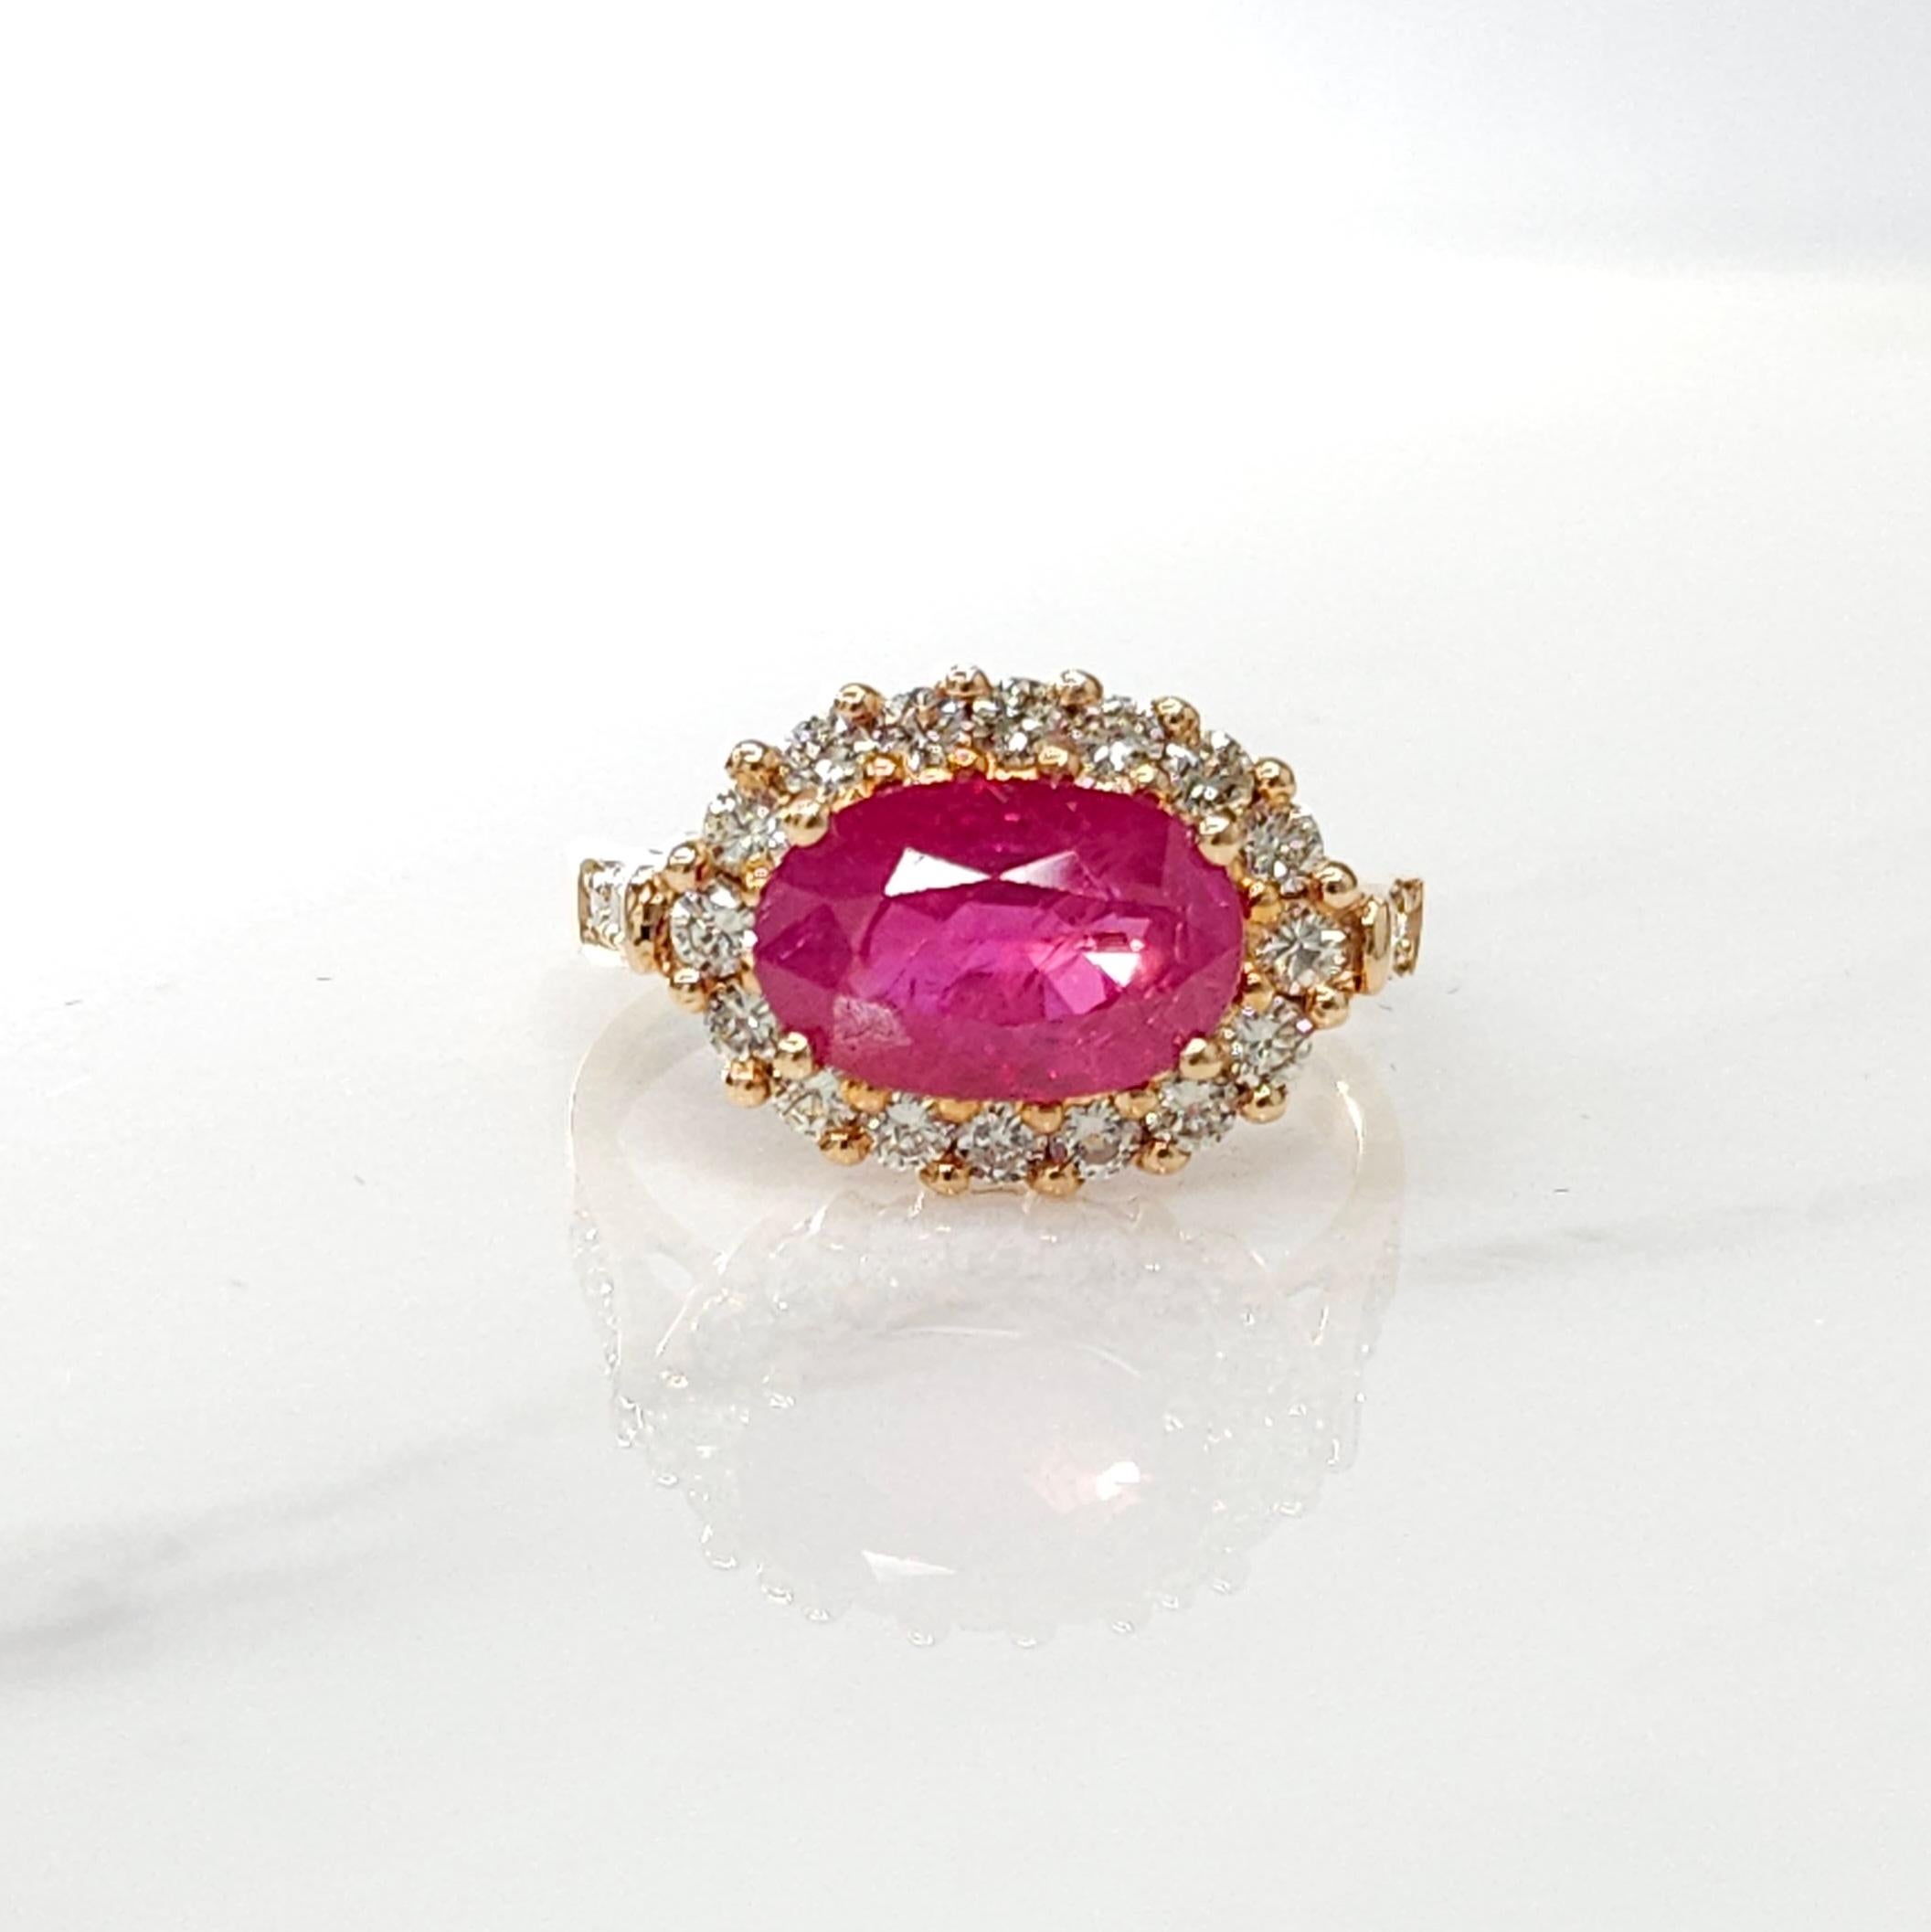 IGI Certified 3.01 Carat Burma Ruby & Diamond Ring in 18K Rose Gold For Sale 1